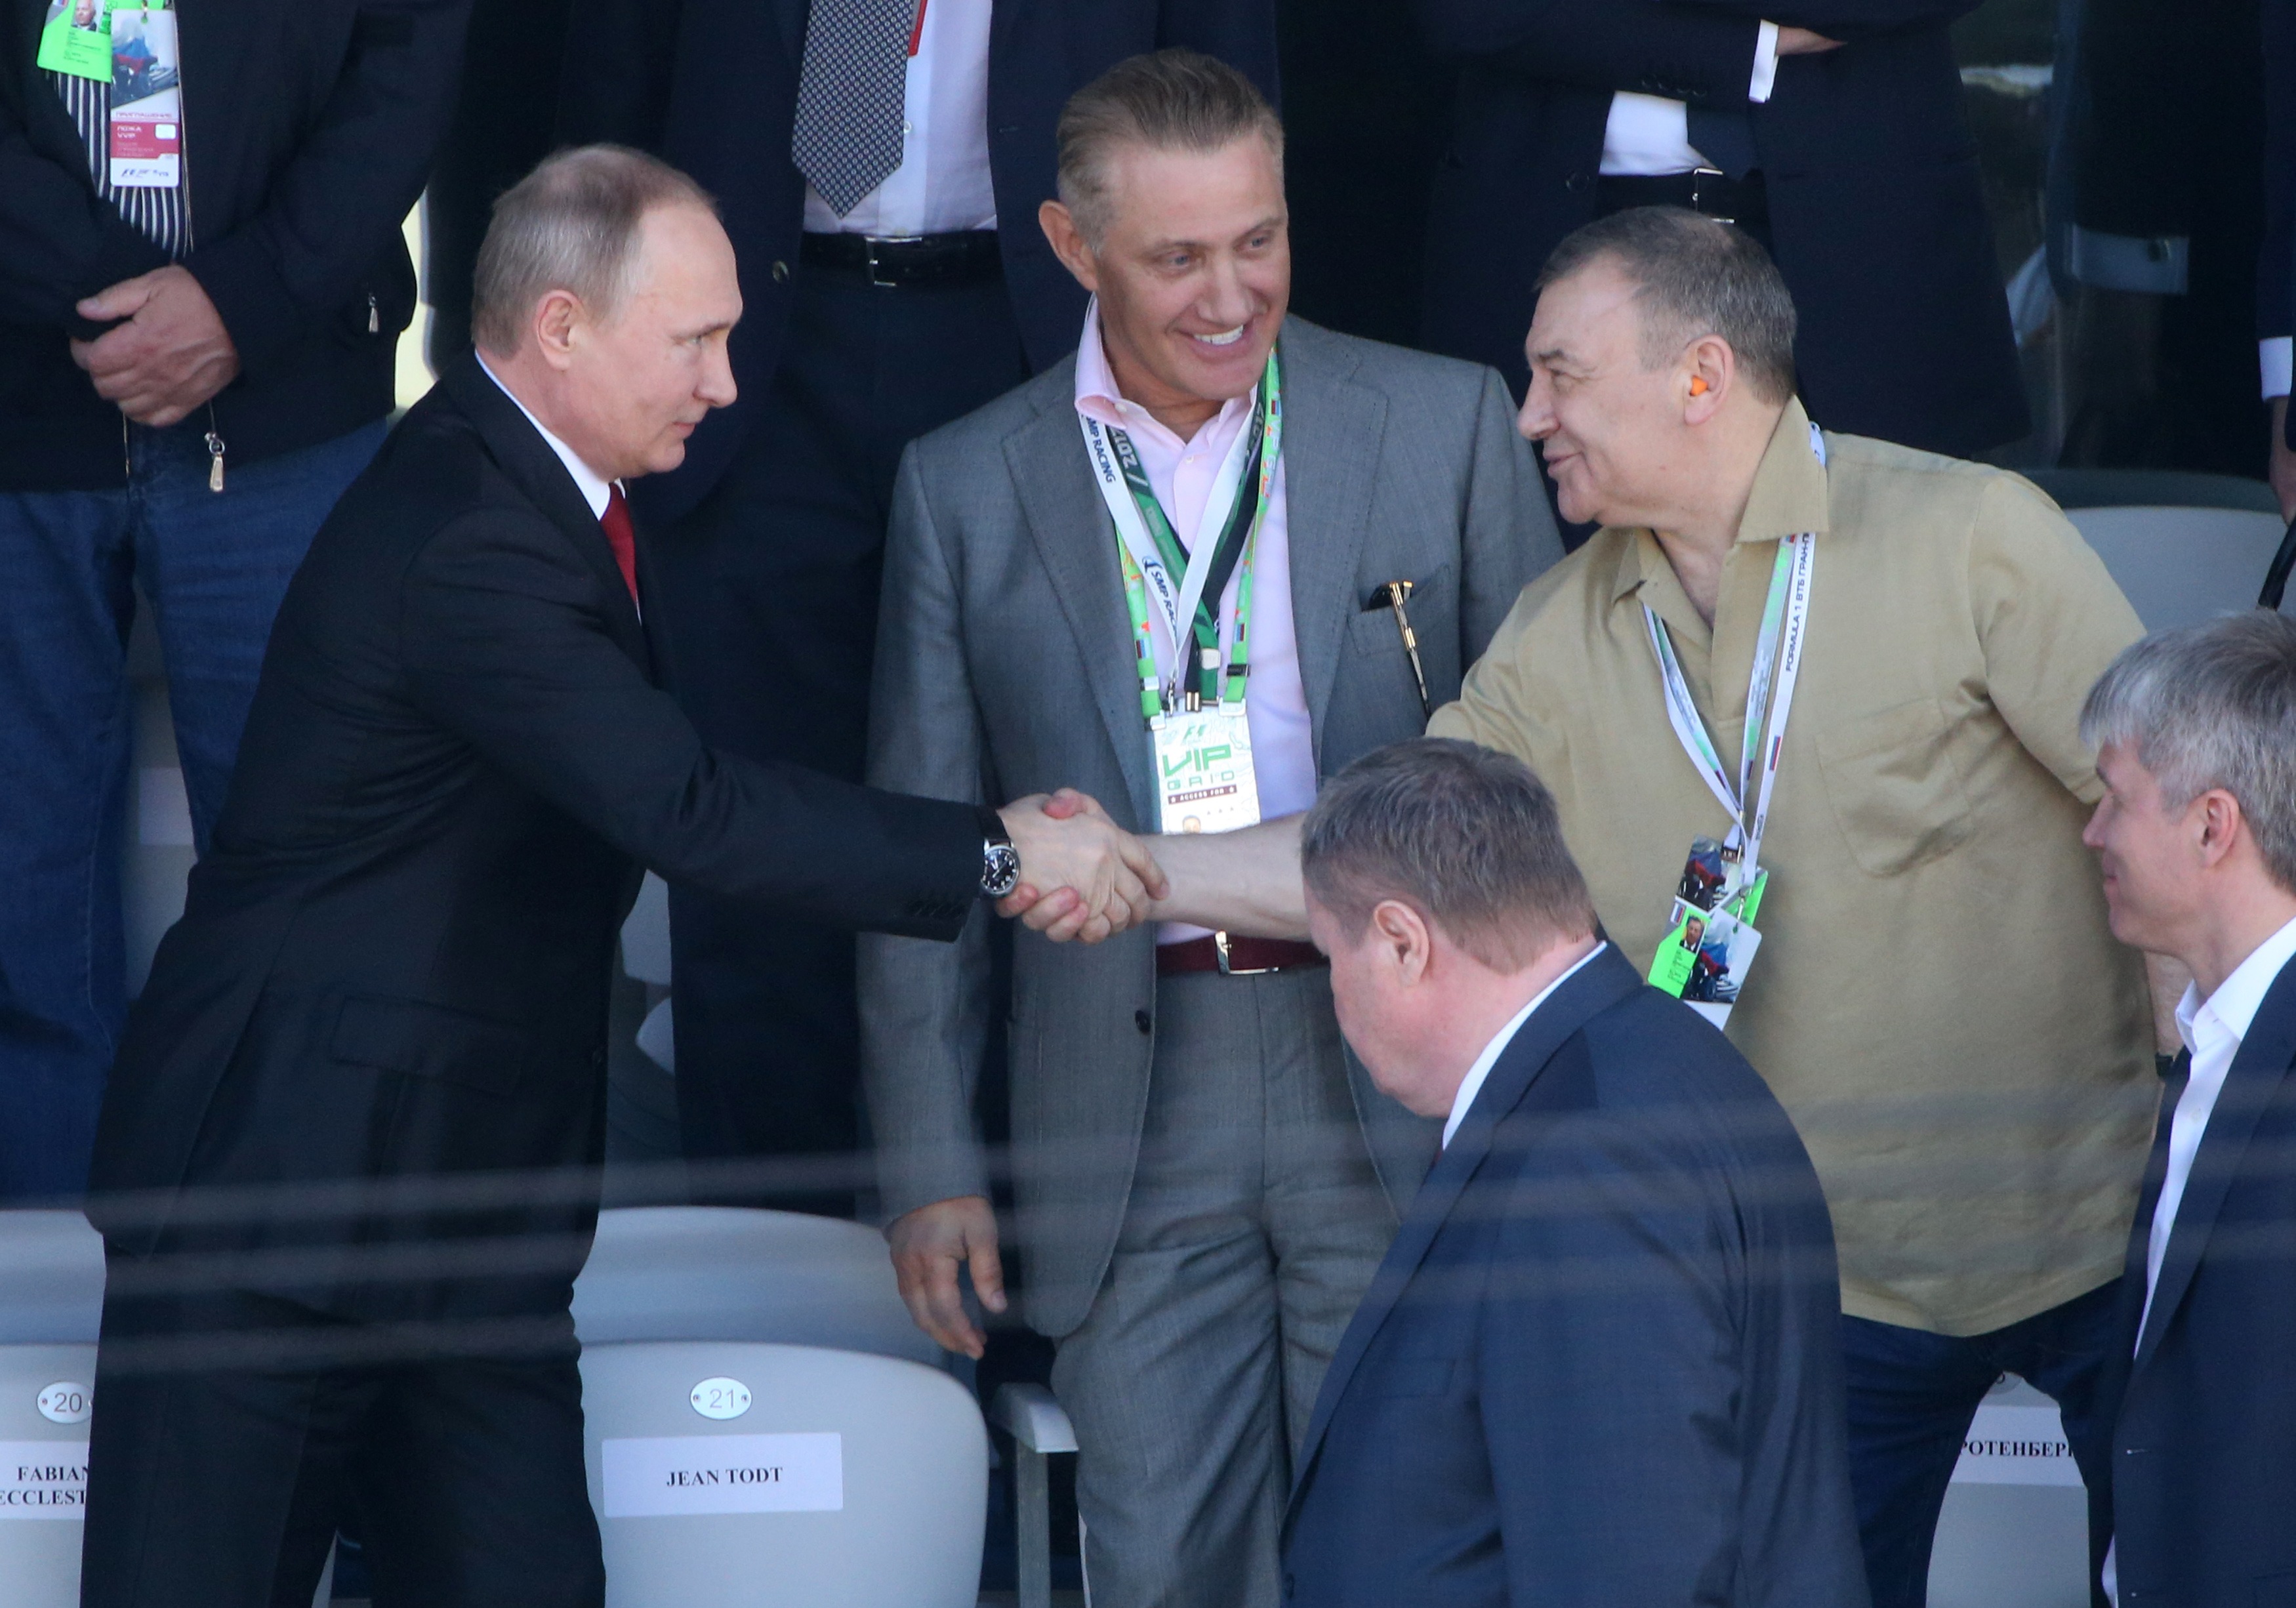 Rotenberg brothers with Vladimir Putin